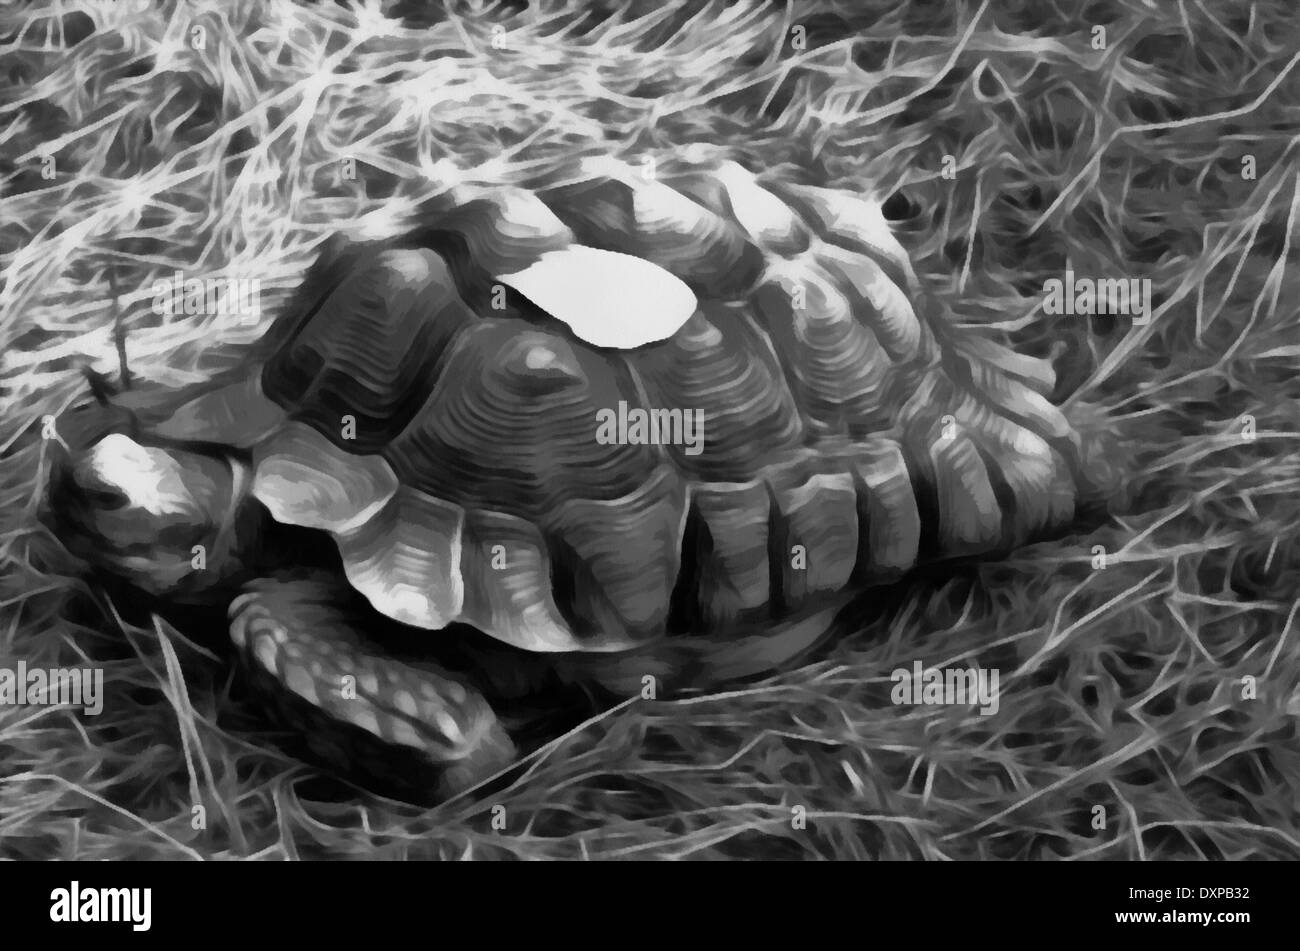 Shporonosnaya turtle (Latin Geochelone sulcata) - kind of tortoises. Stock Photo